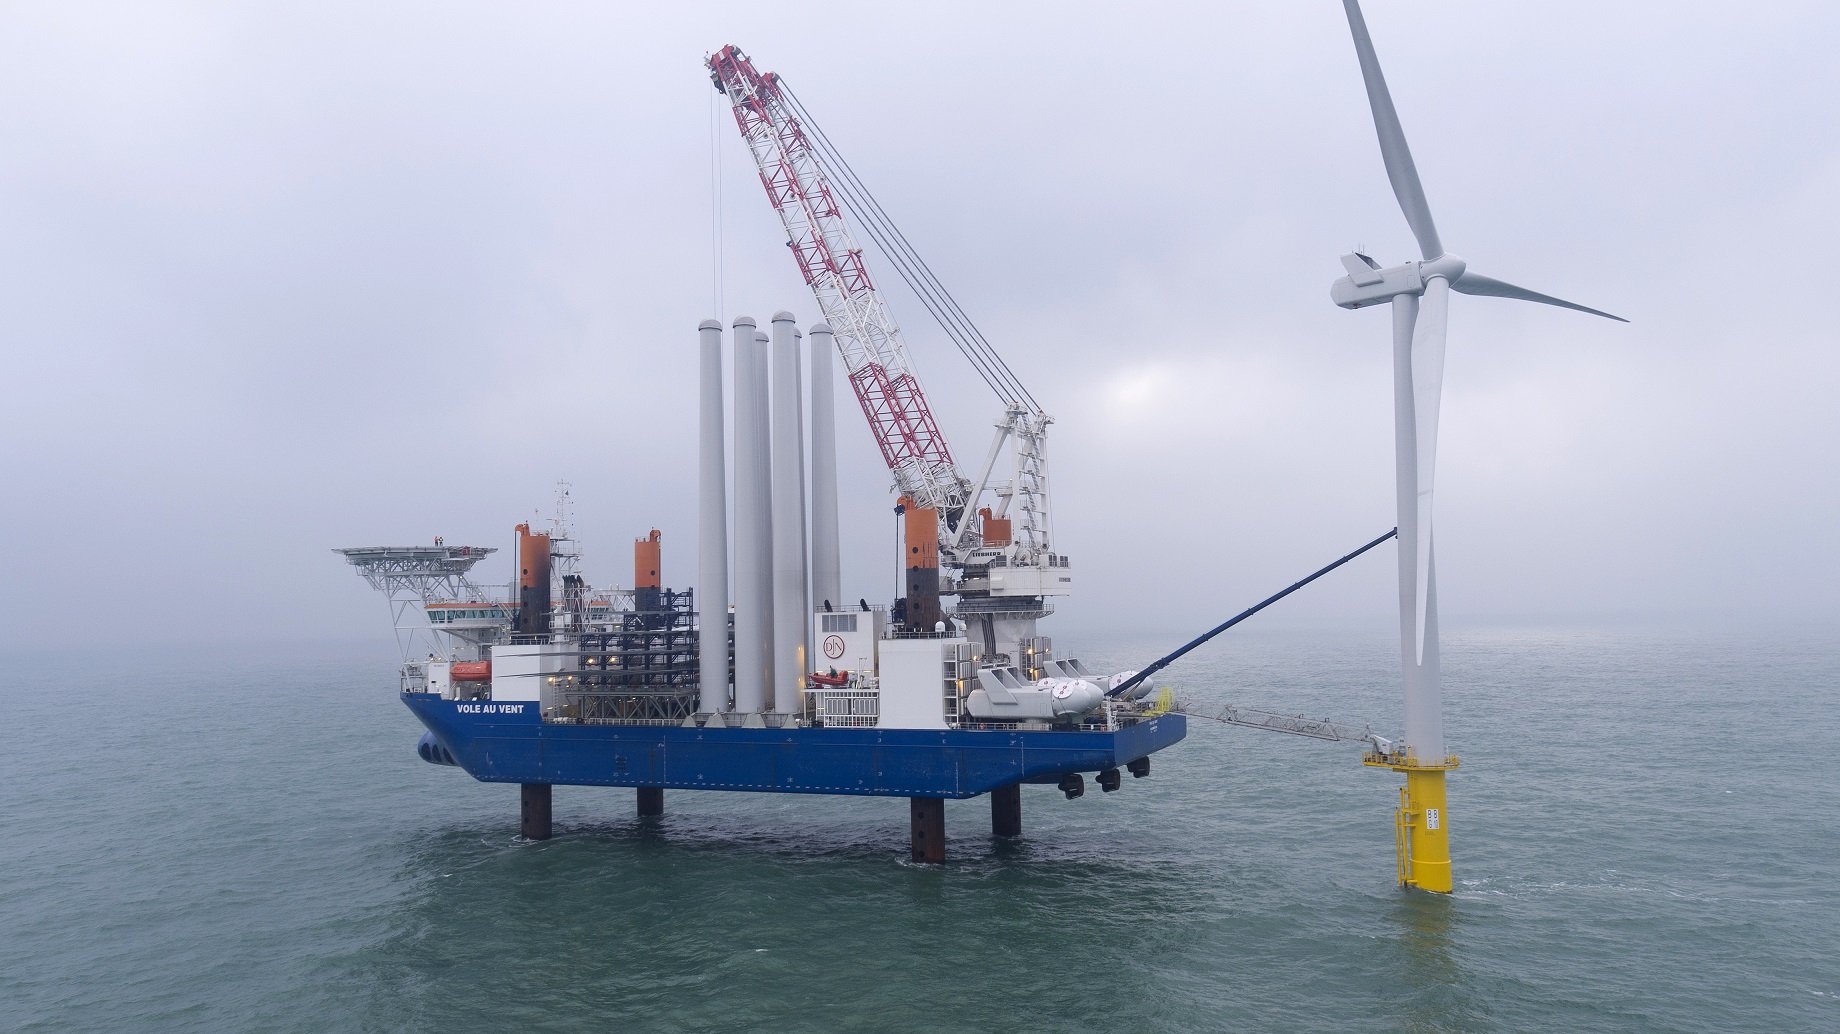 Vole au vent installation vessel installing a wind turbine at sea